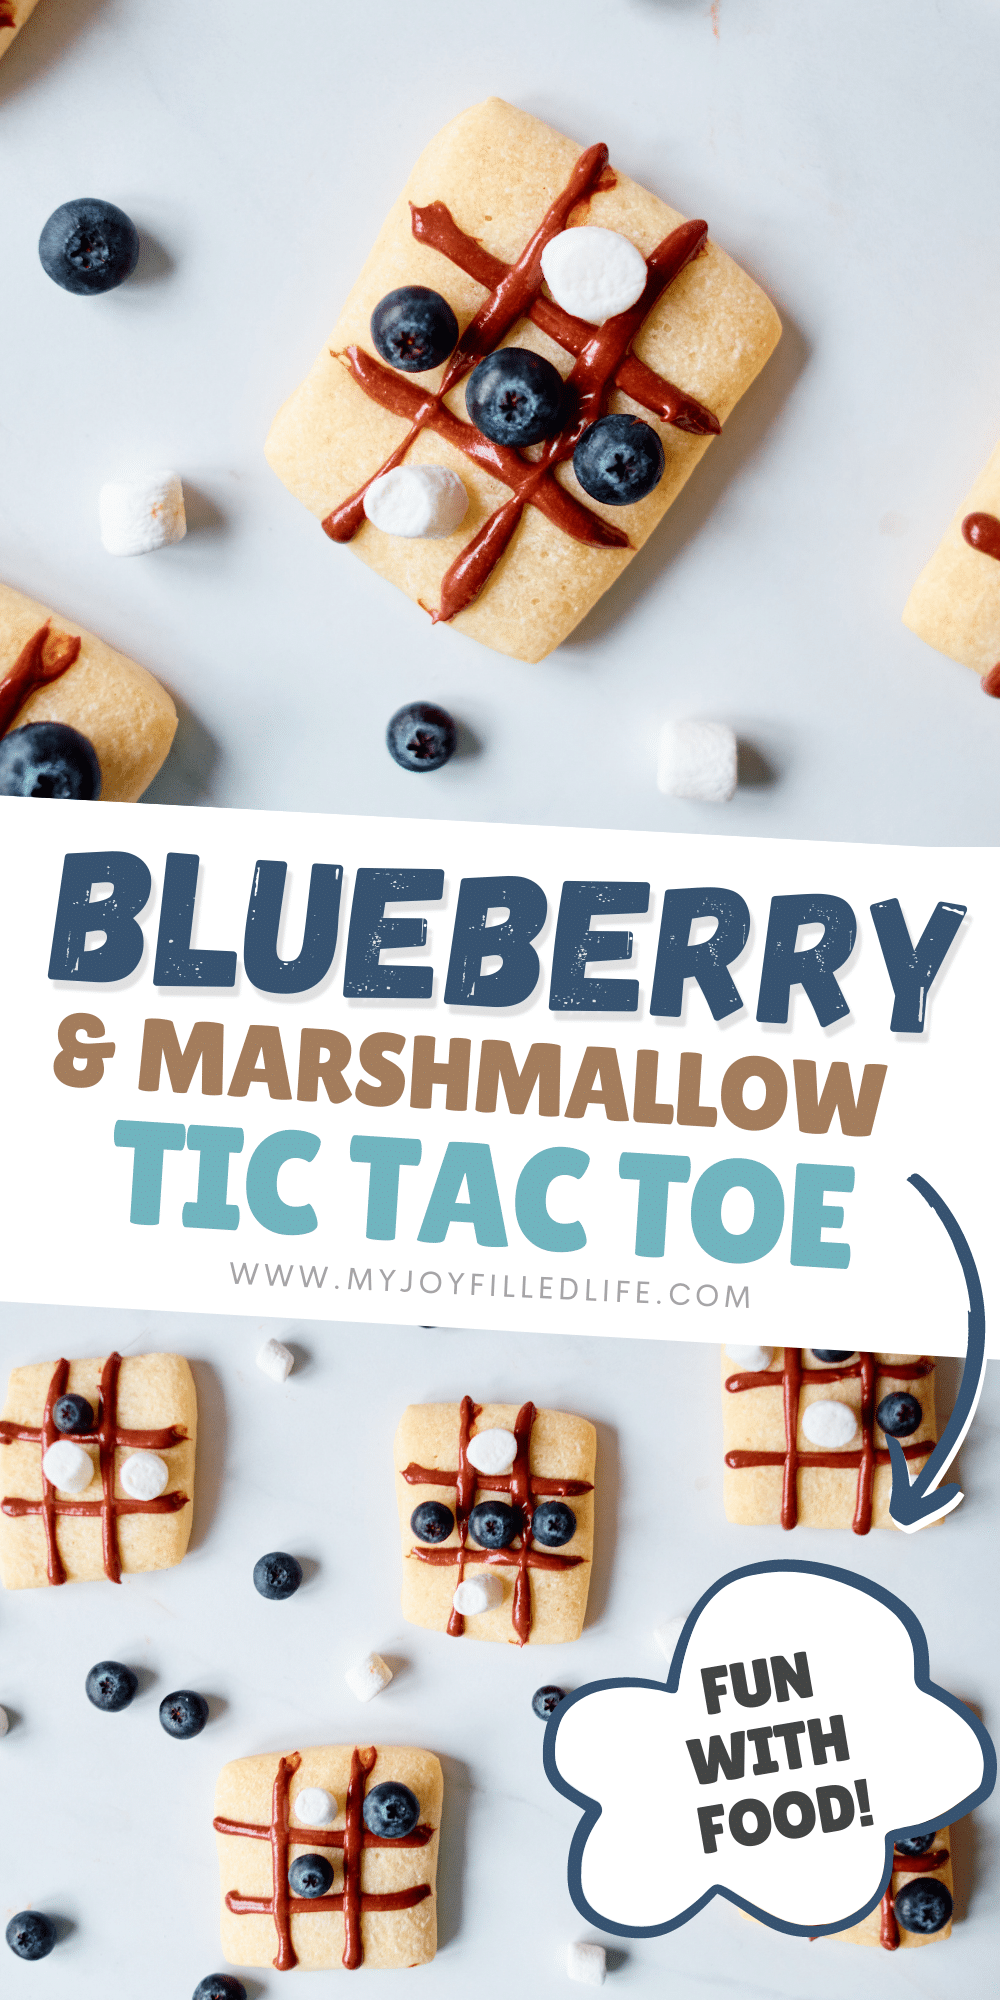 Blueberry Snacks Ideas for Kids